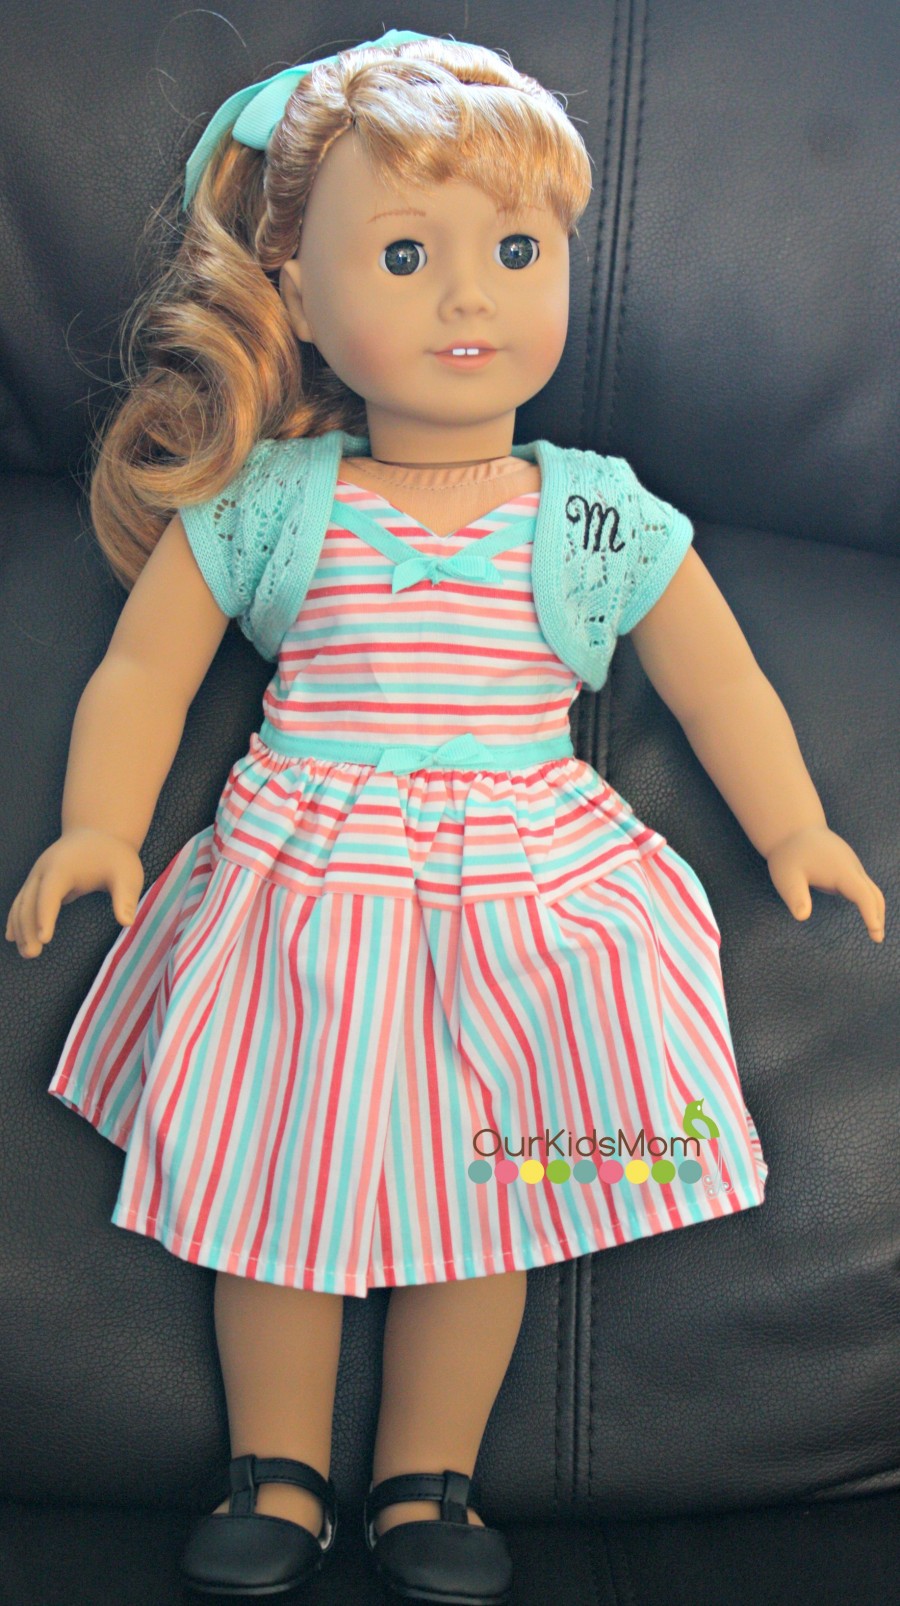 Meet the Newest American Girl Doll Maryellen